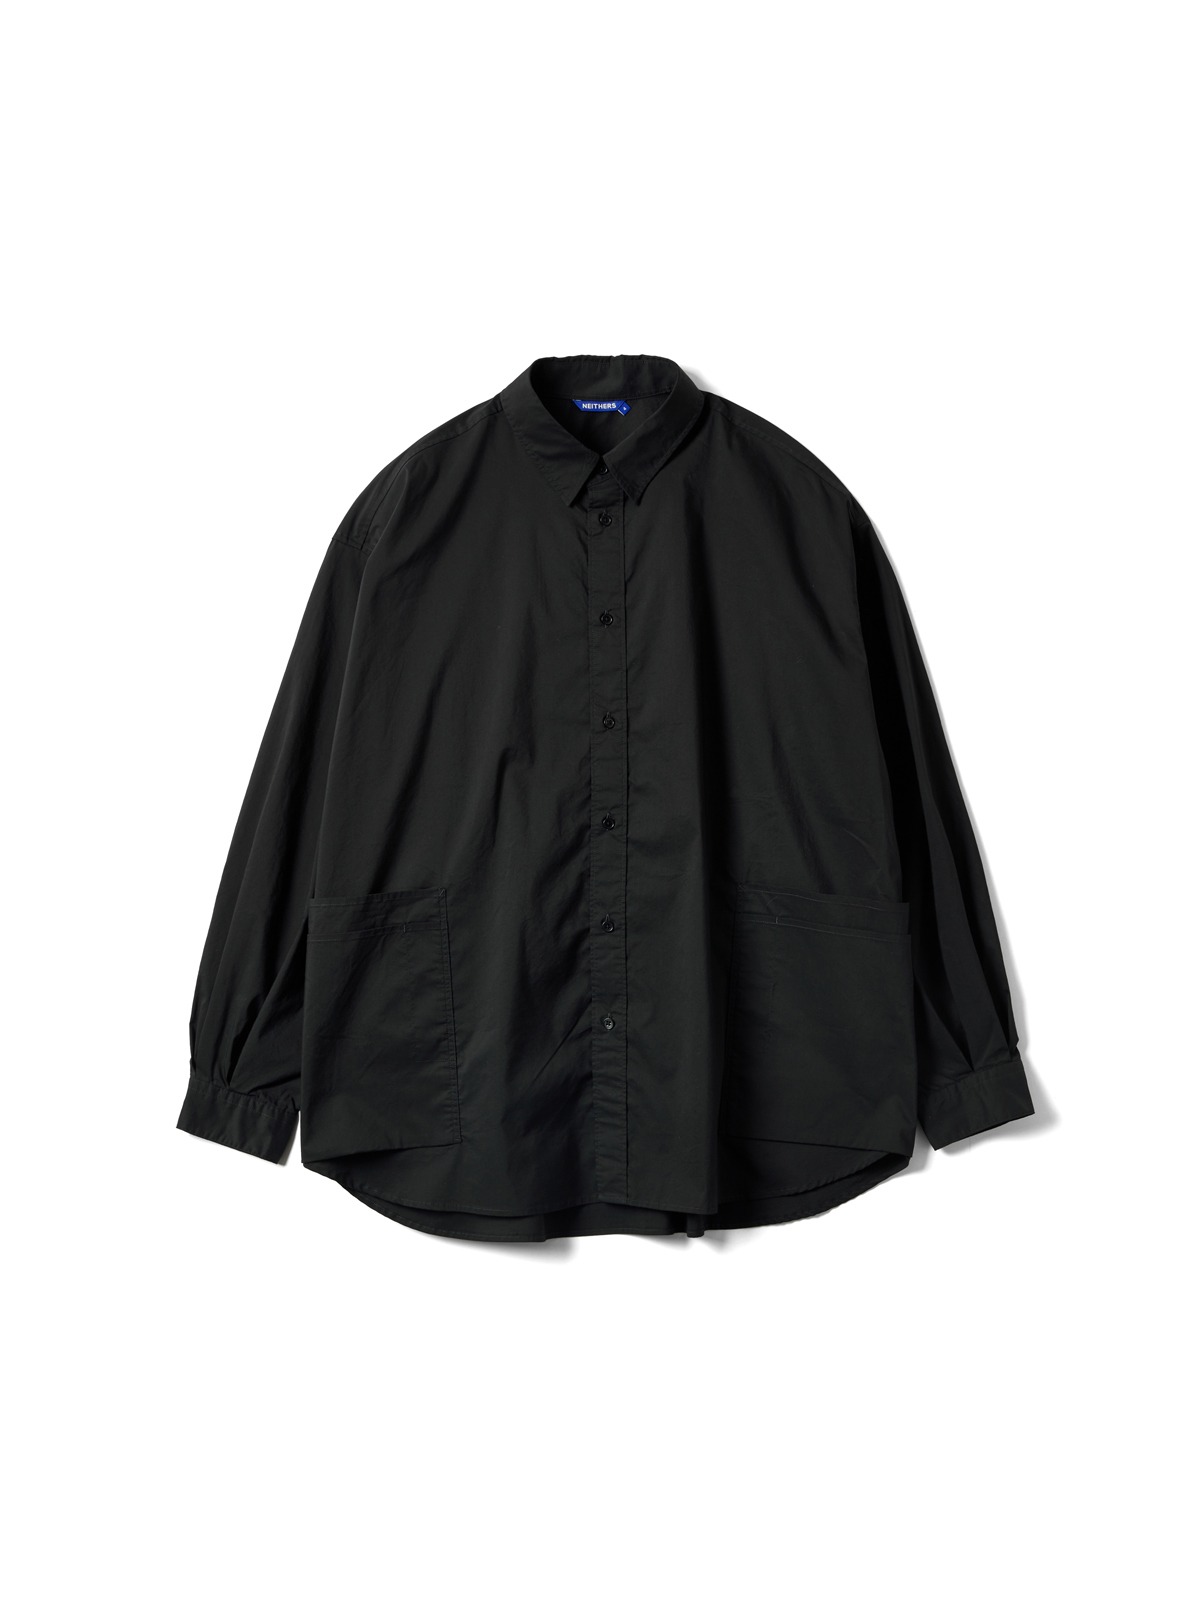 Sleepwalker Apron L/S Shirt (Black)